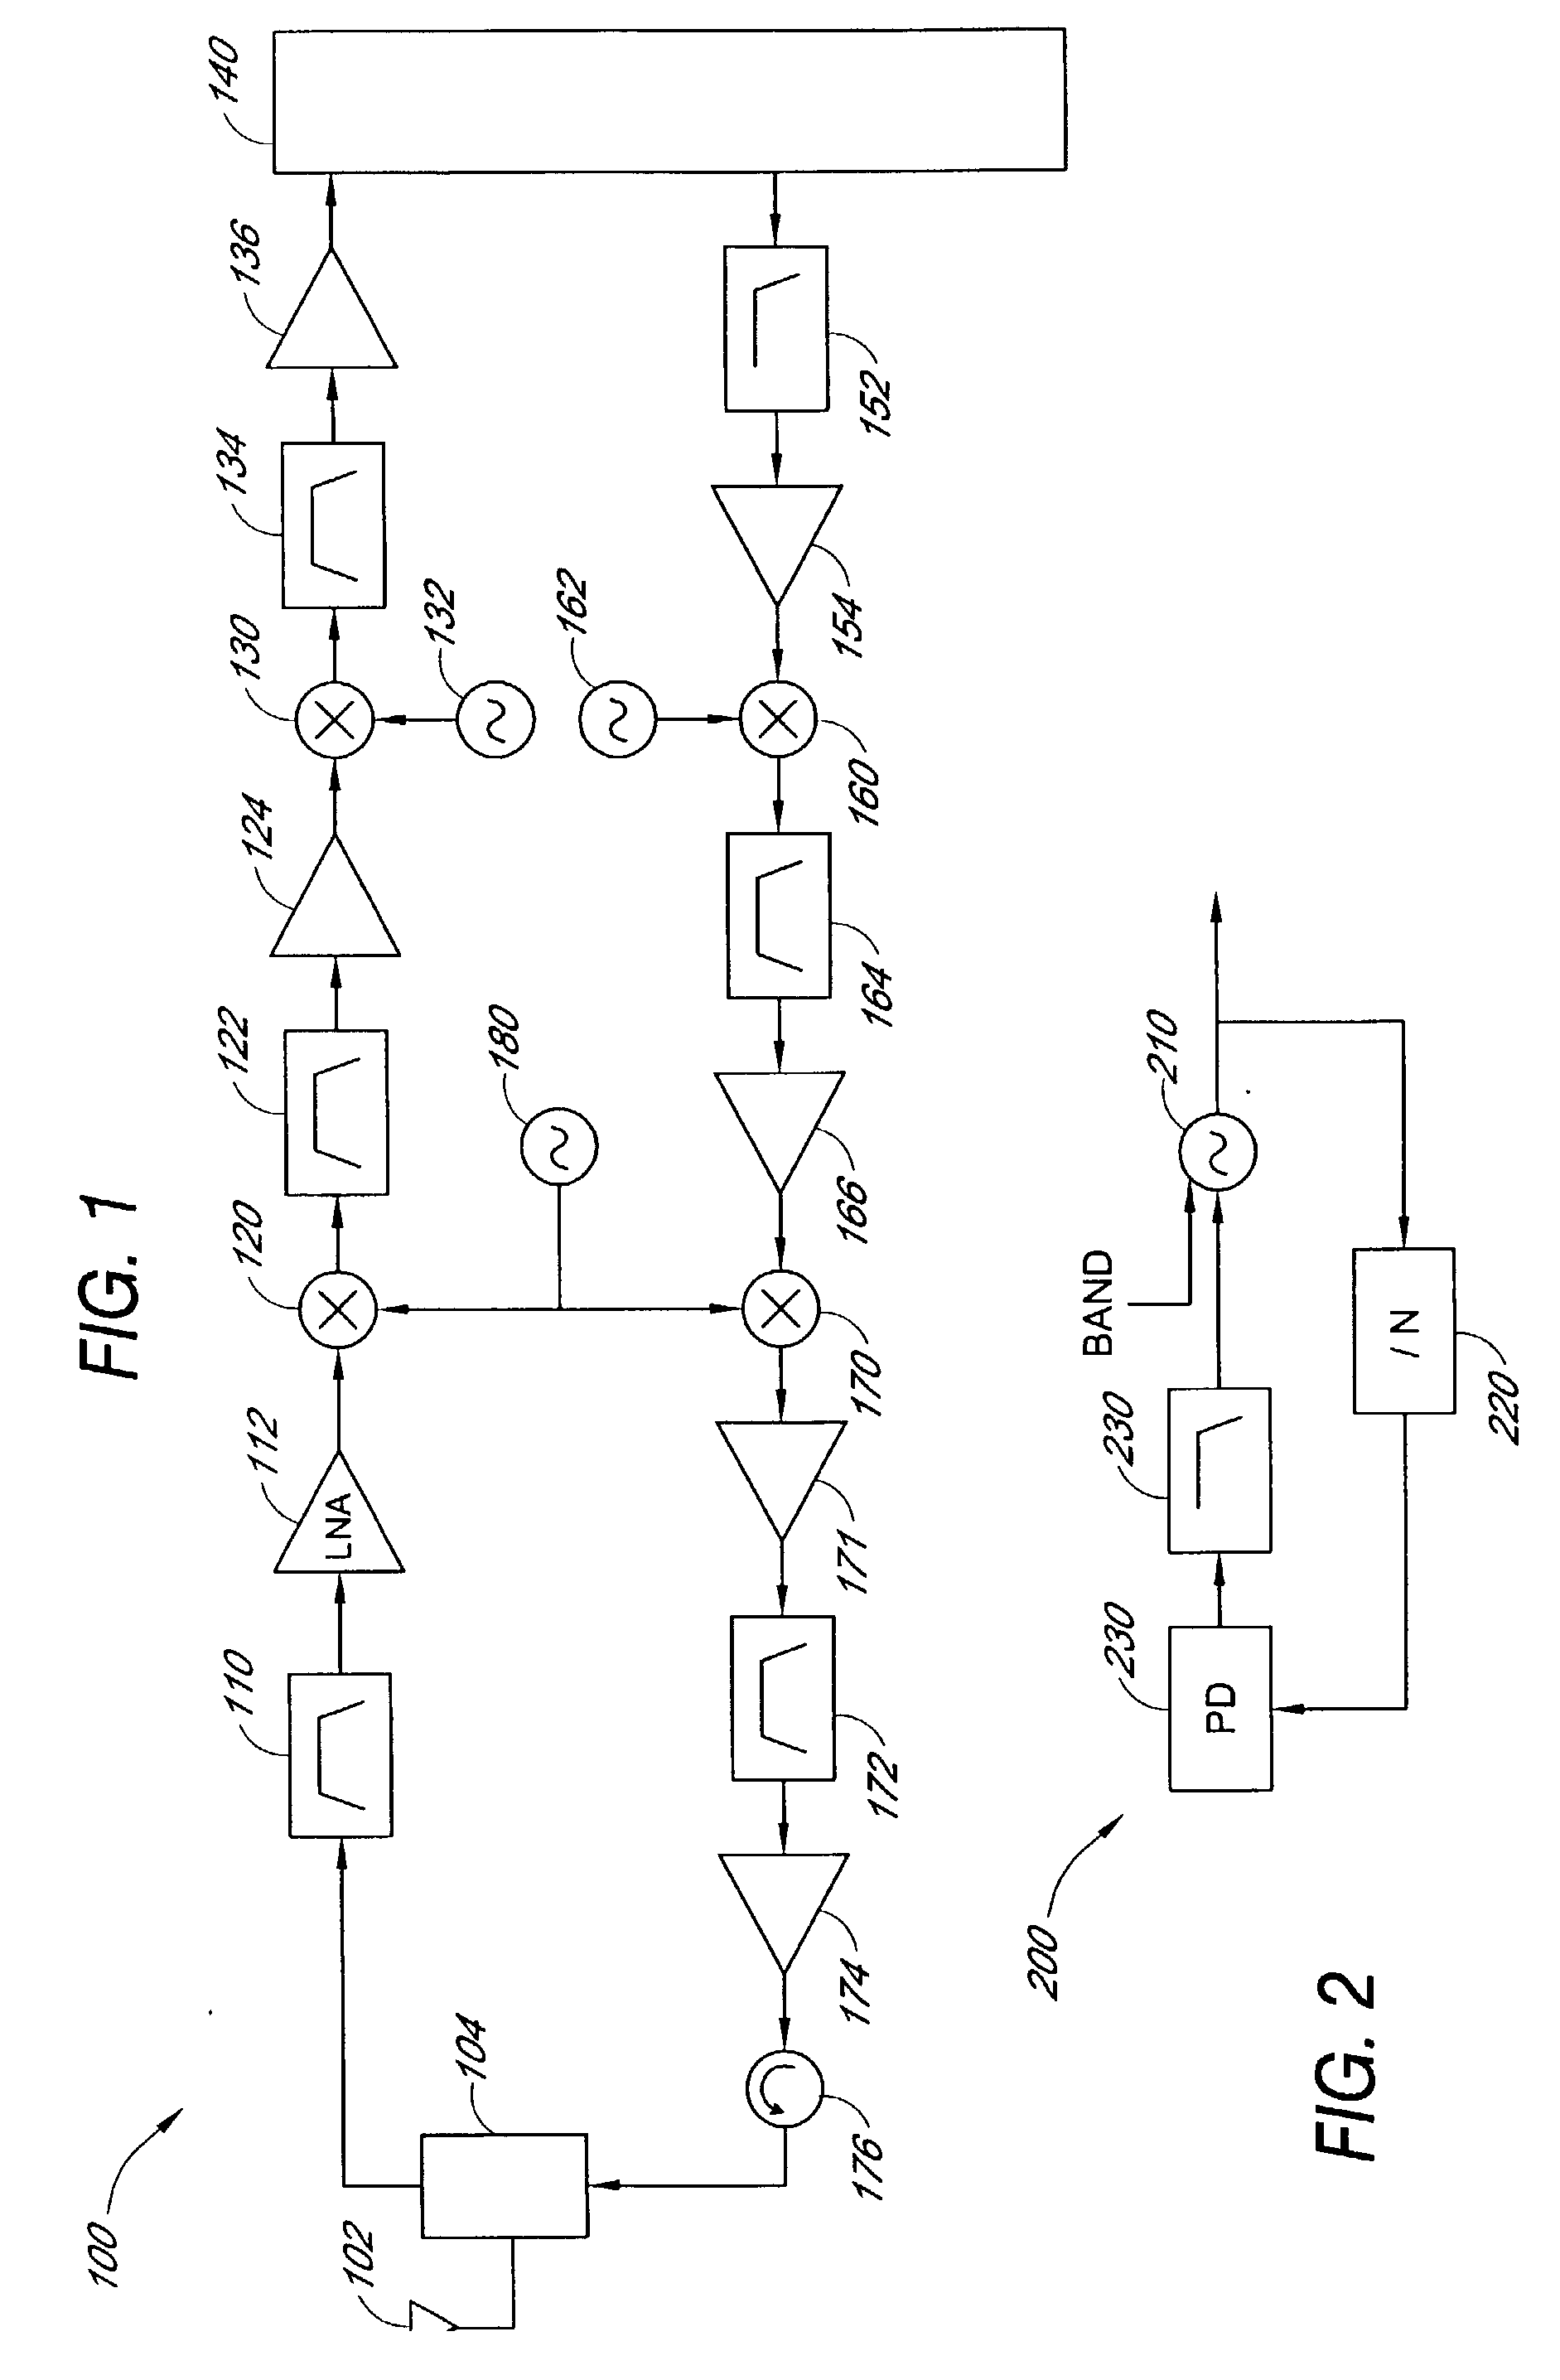 Wideband VCO resonant circuit method and apparatus